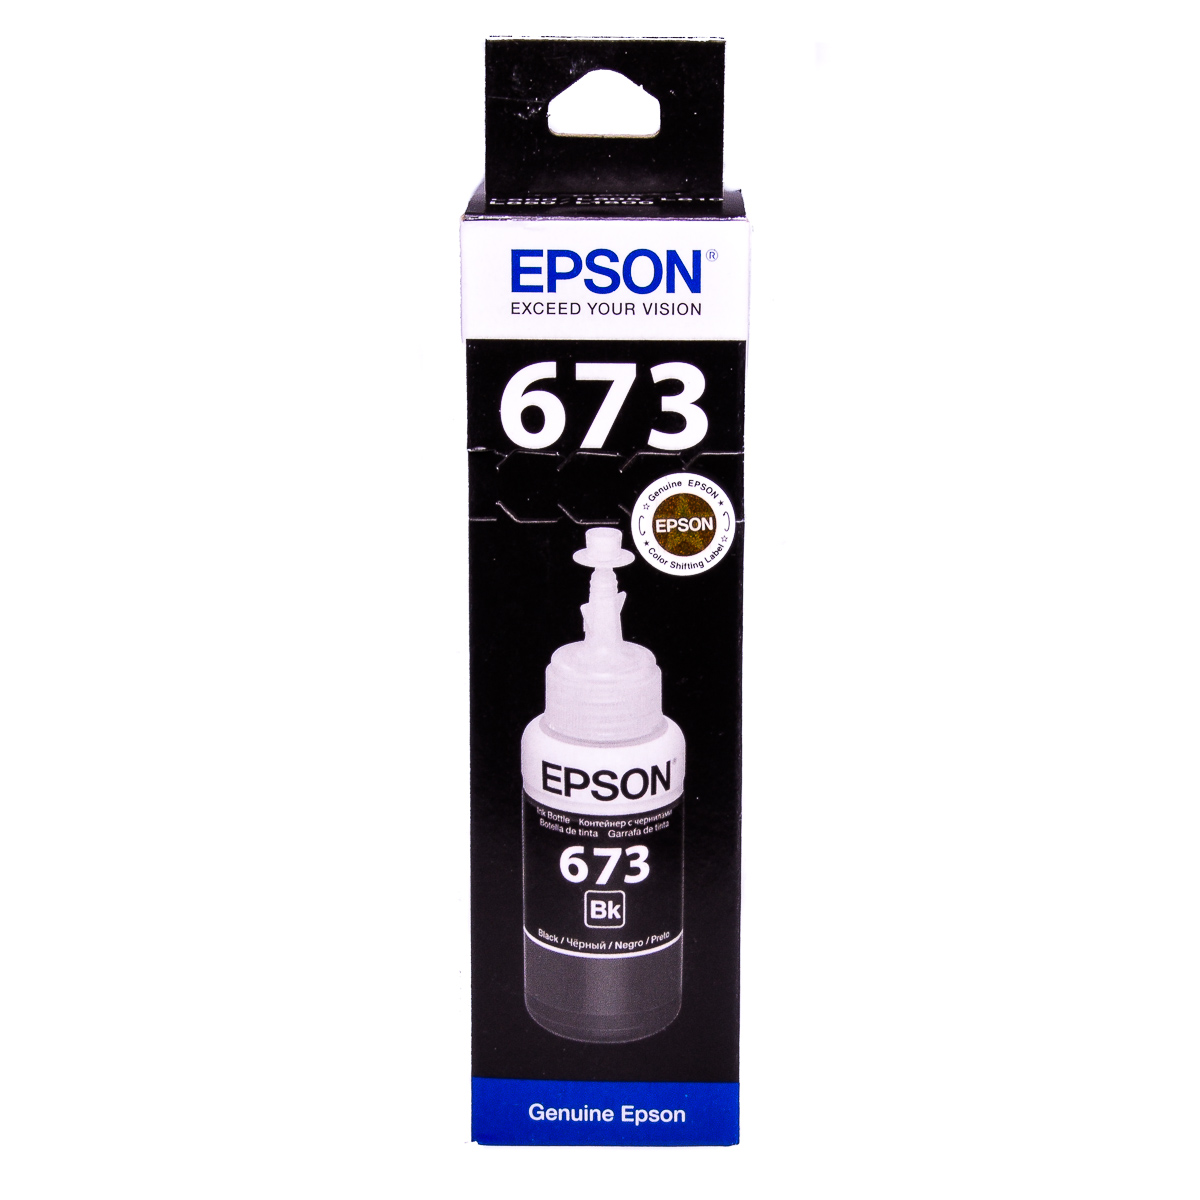 Epson T0801 Black original dye ink refill Replaces Stylus RX585